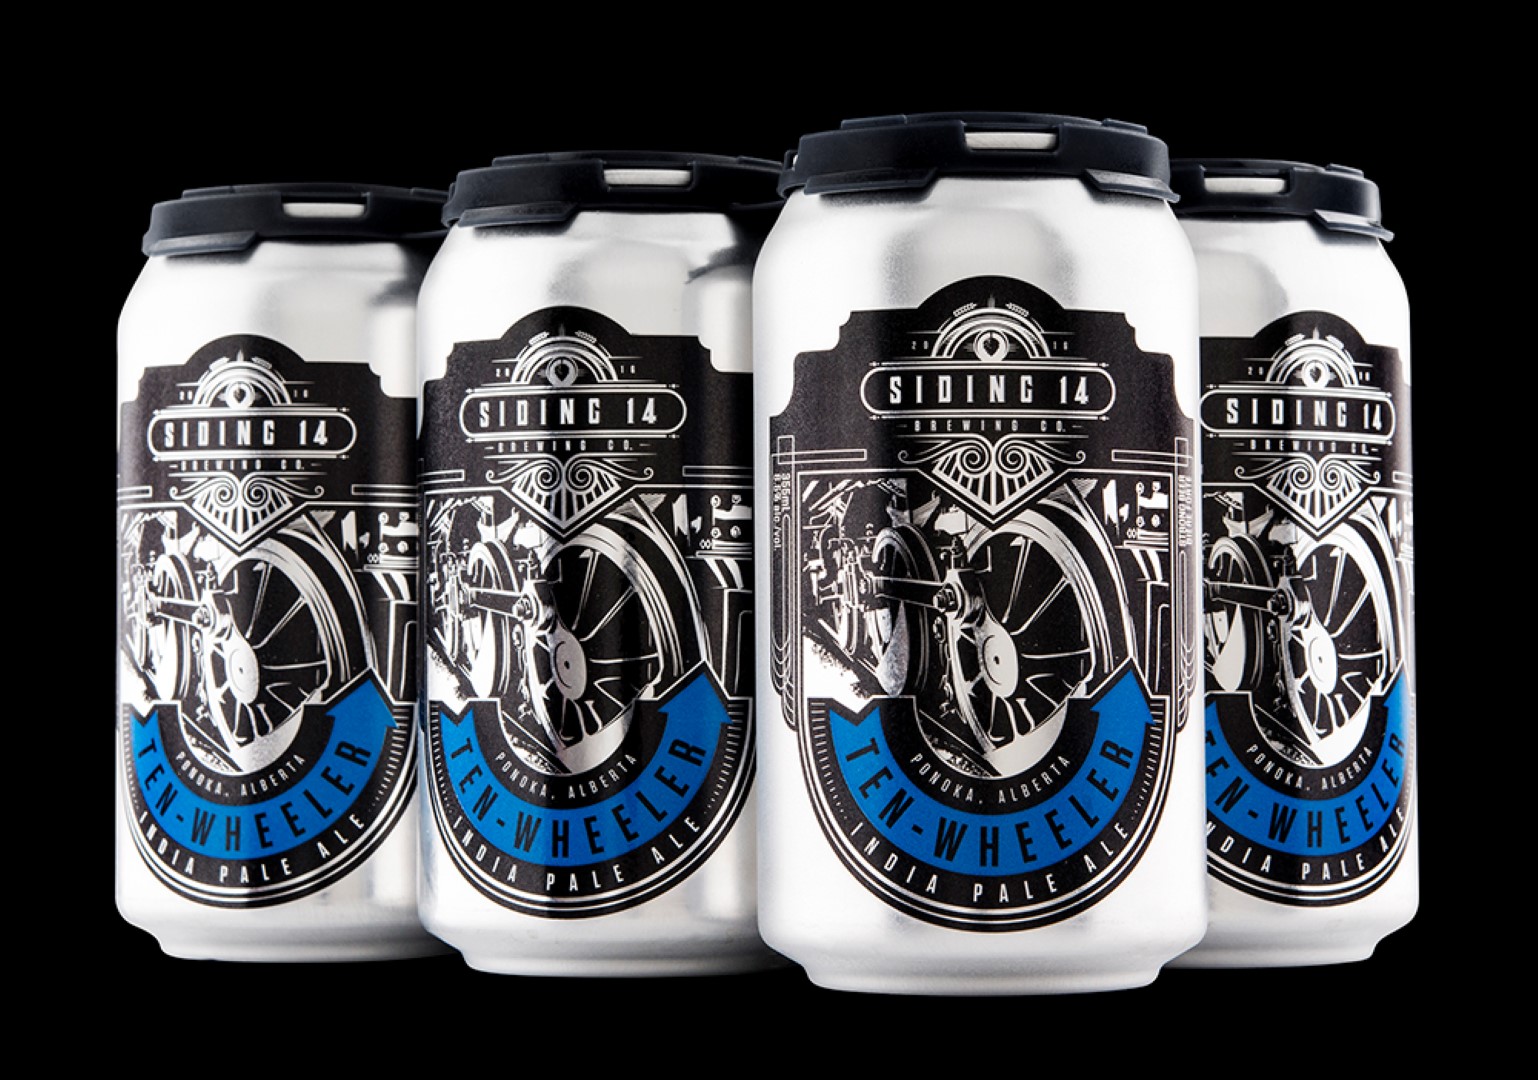 Hired Guns Creative – Siding 14 Brewing Co.